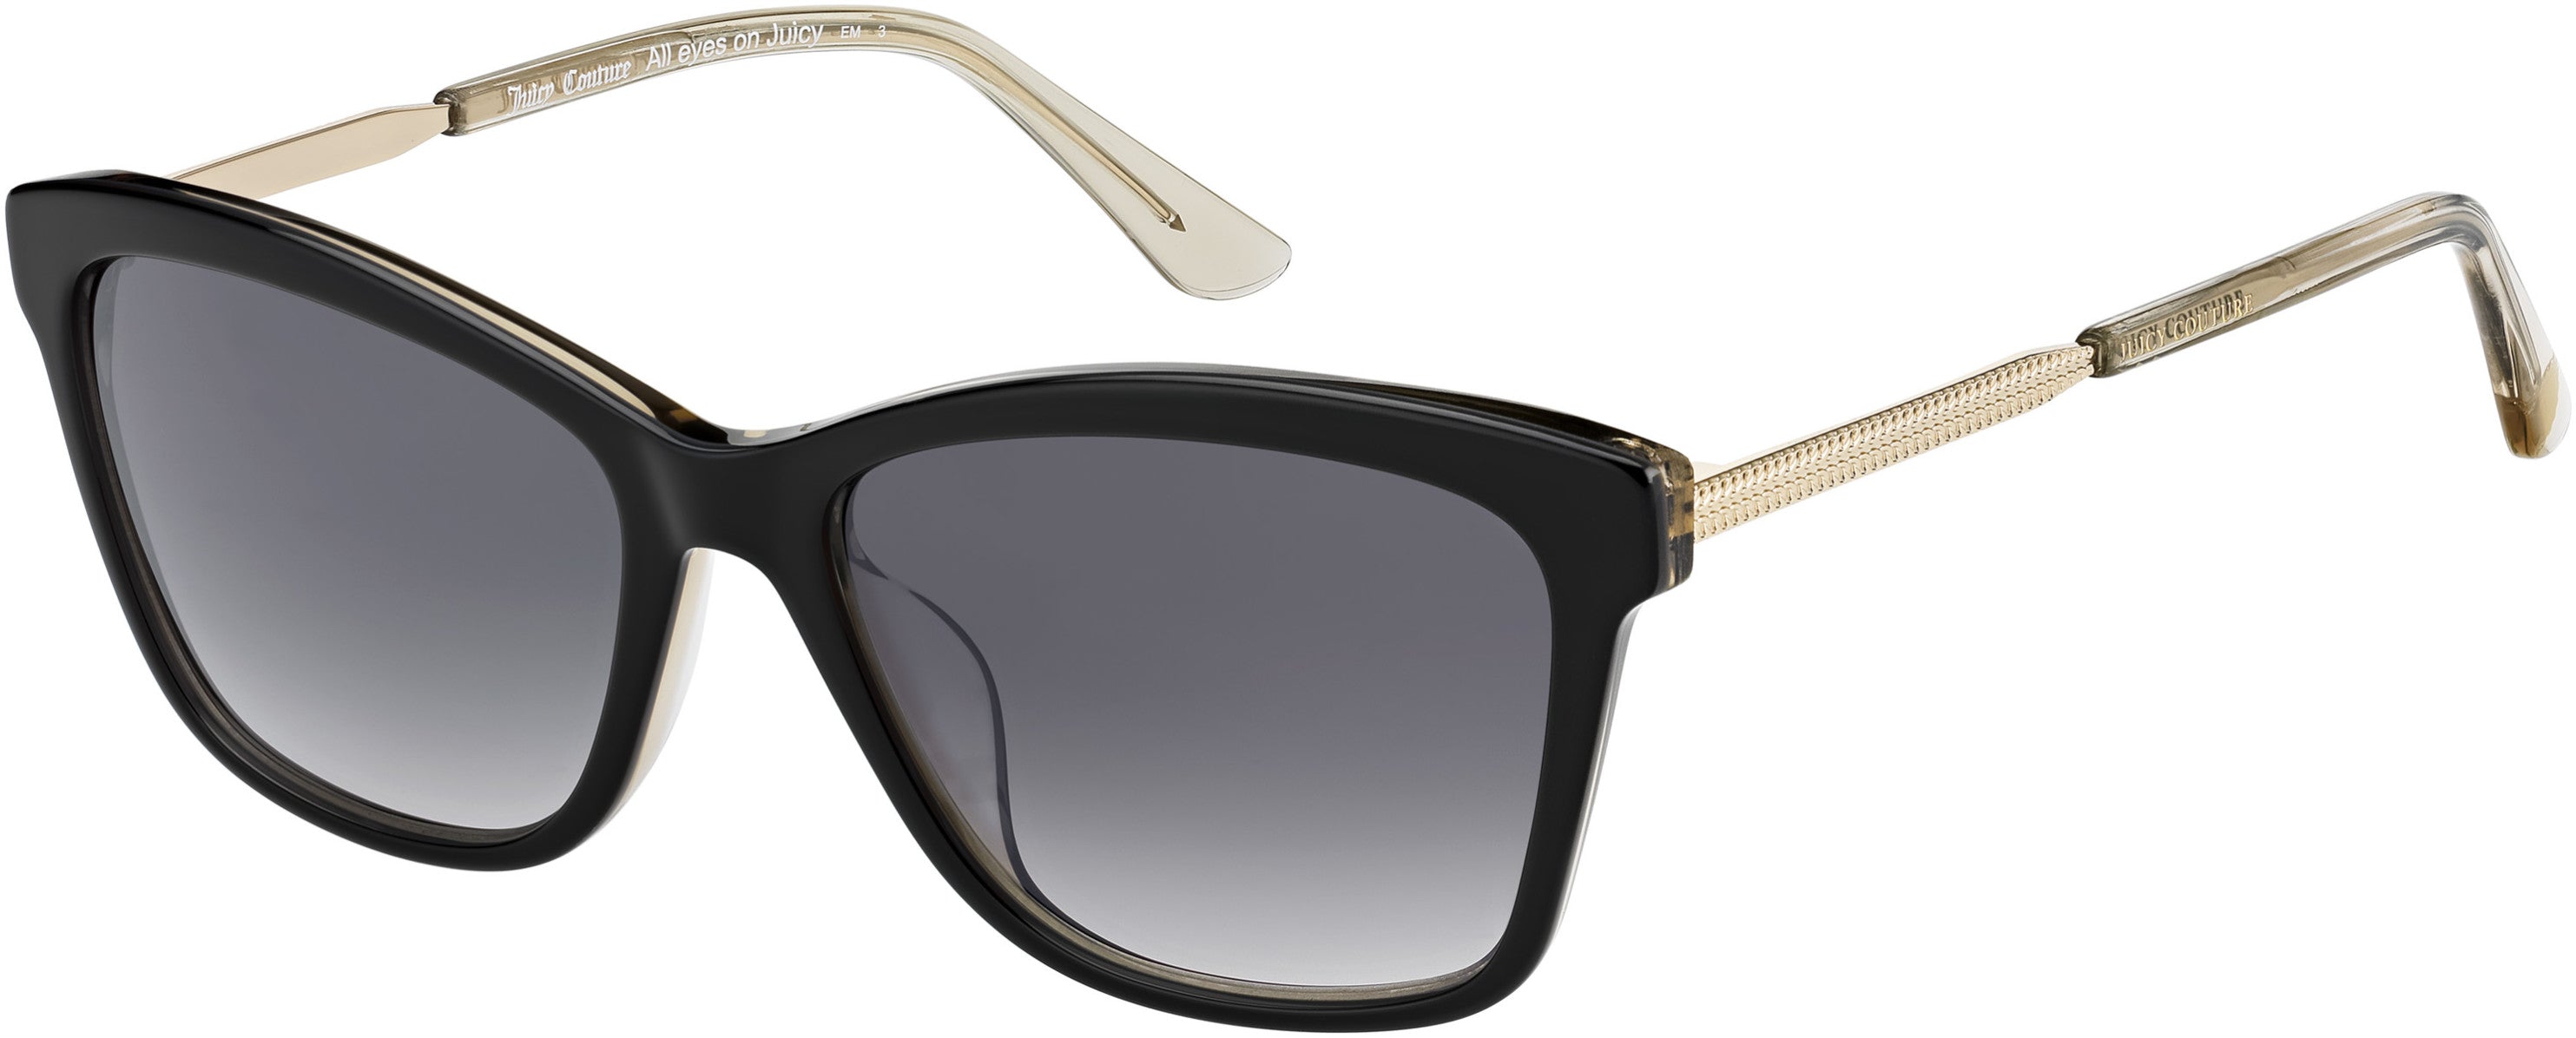 Juicy Couture Juicy 604/S Rectangular Sunglasses 00WM-00WM  Black Beige (9O Dark Gray Gradient)